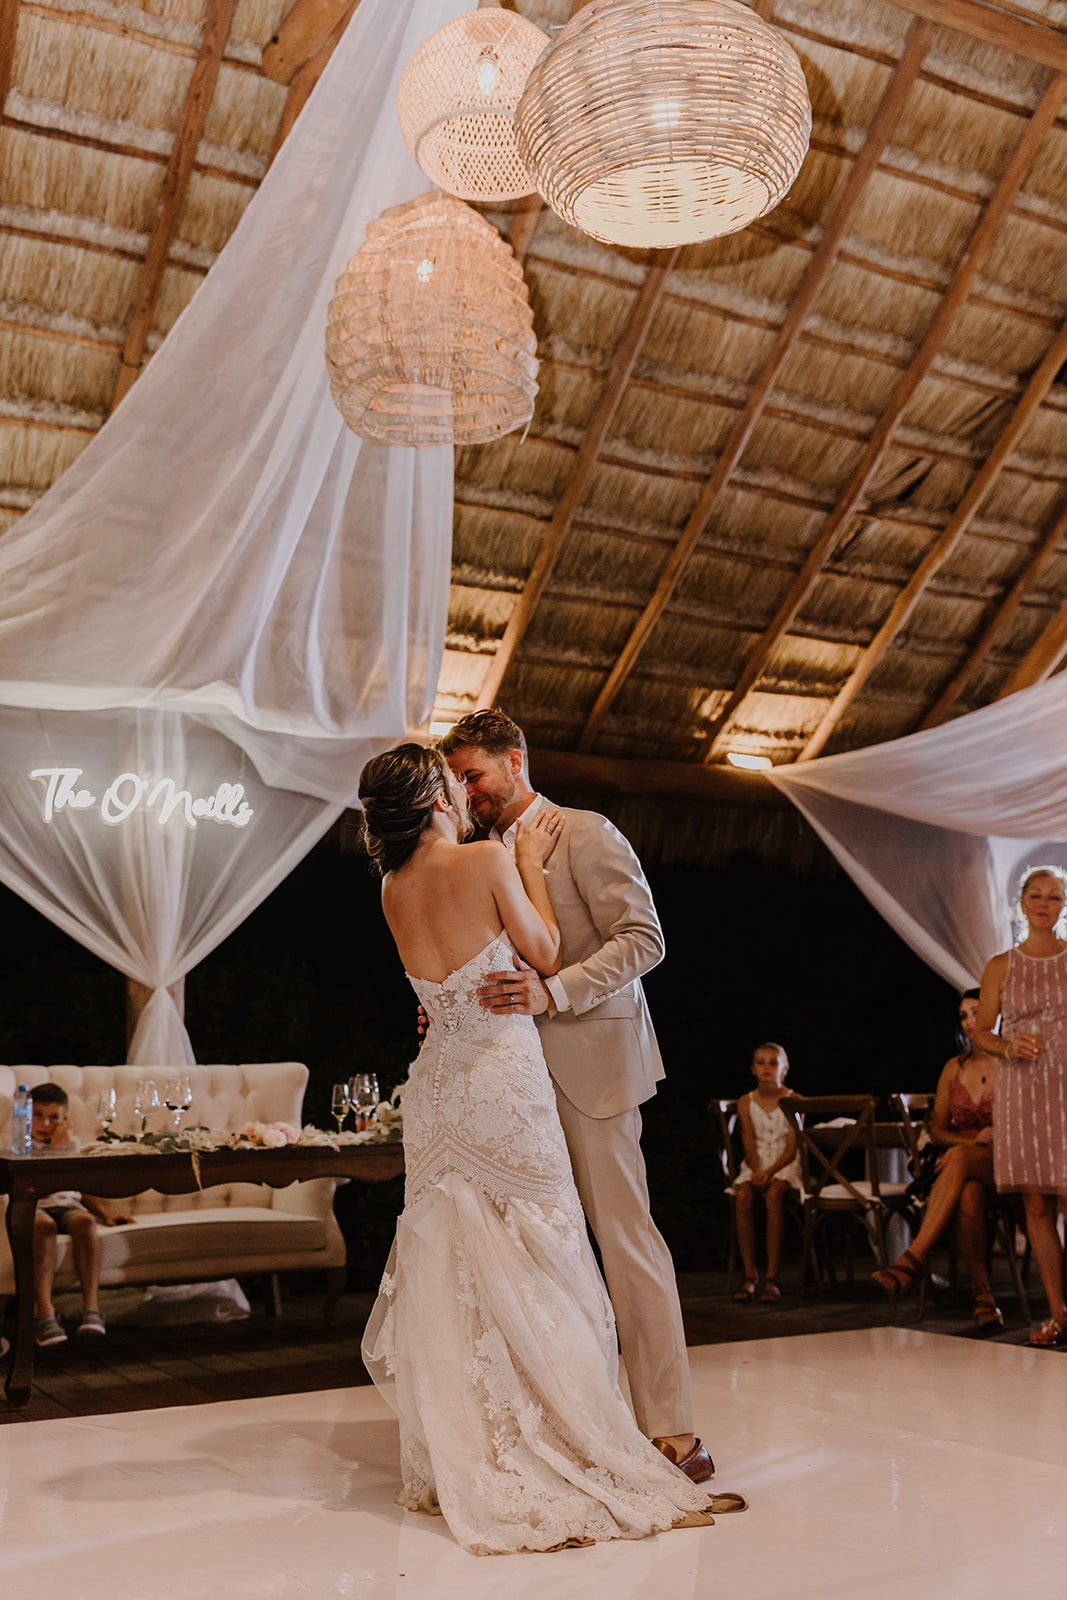 Boho Finest Playa Mujeres wedding photos near Cancun Mexico. 